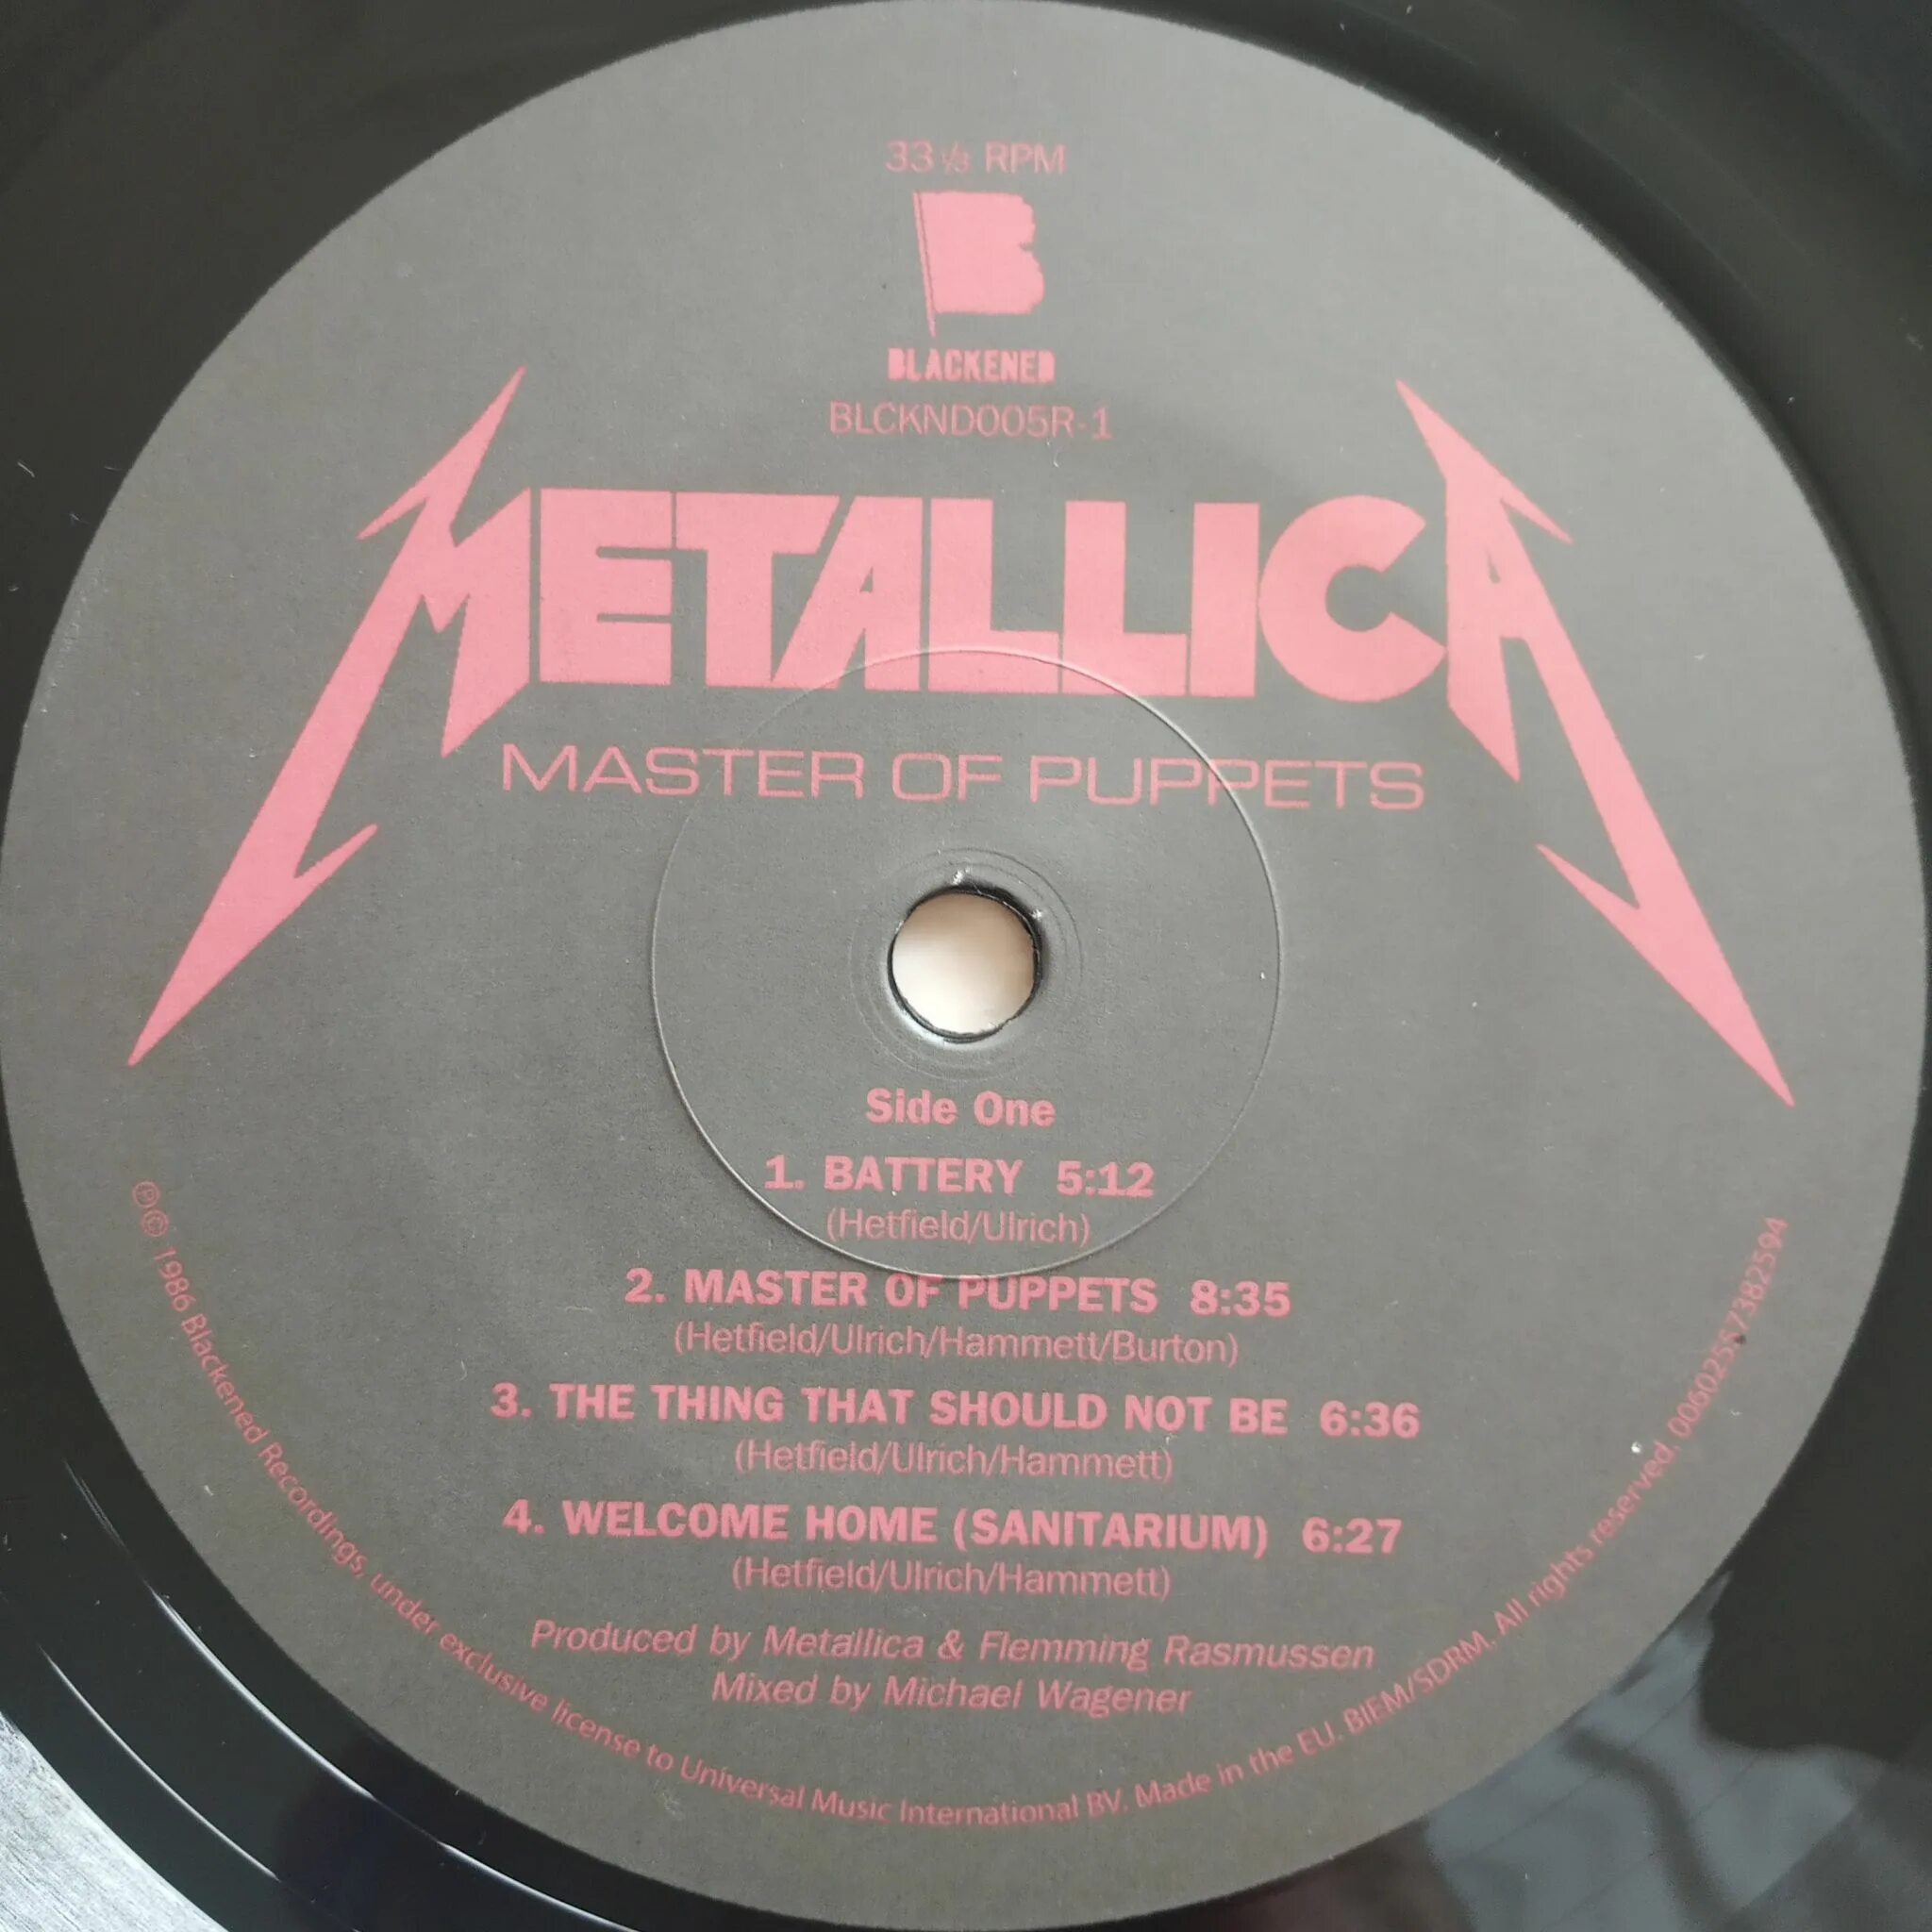 Master of puppets текст. Metallica (1986) - Master of Puppets [LP]. Metallica 1986 Master of Puppets. Виниловая пластинка Metallica. Metallica винил.